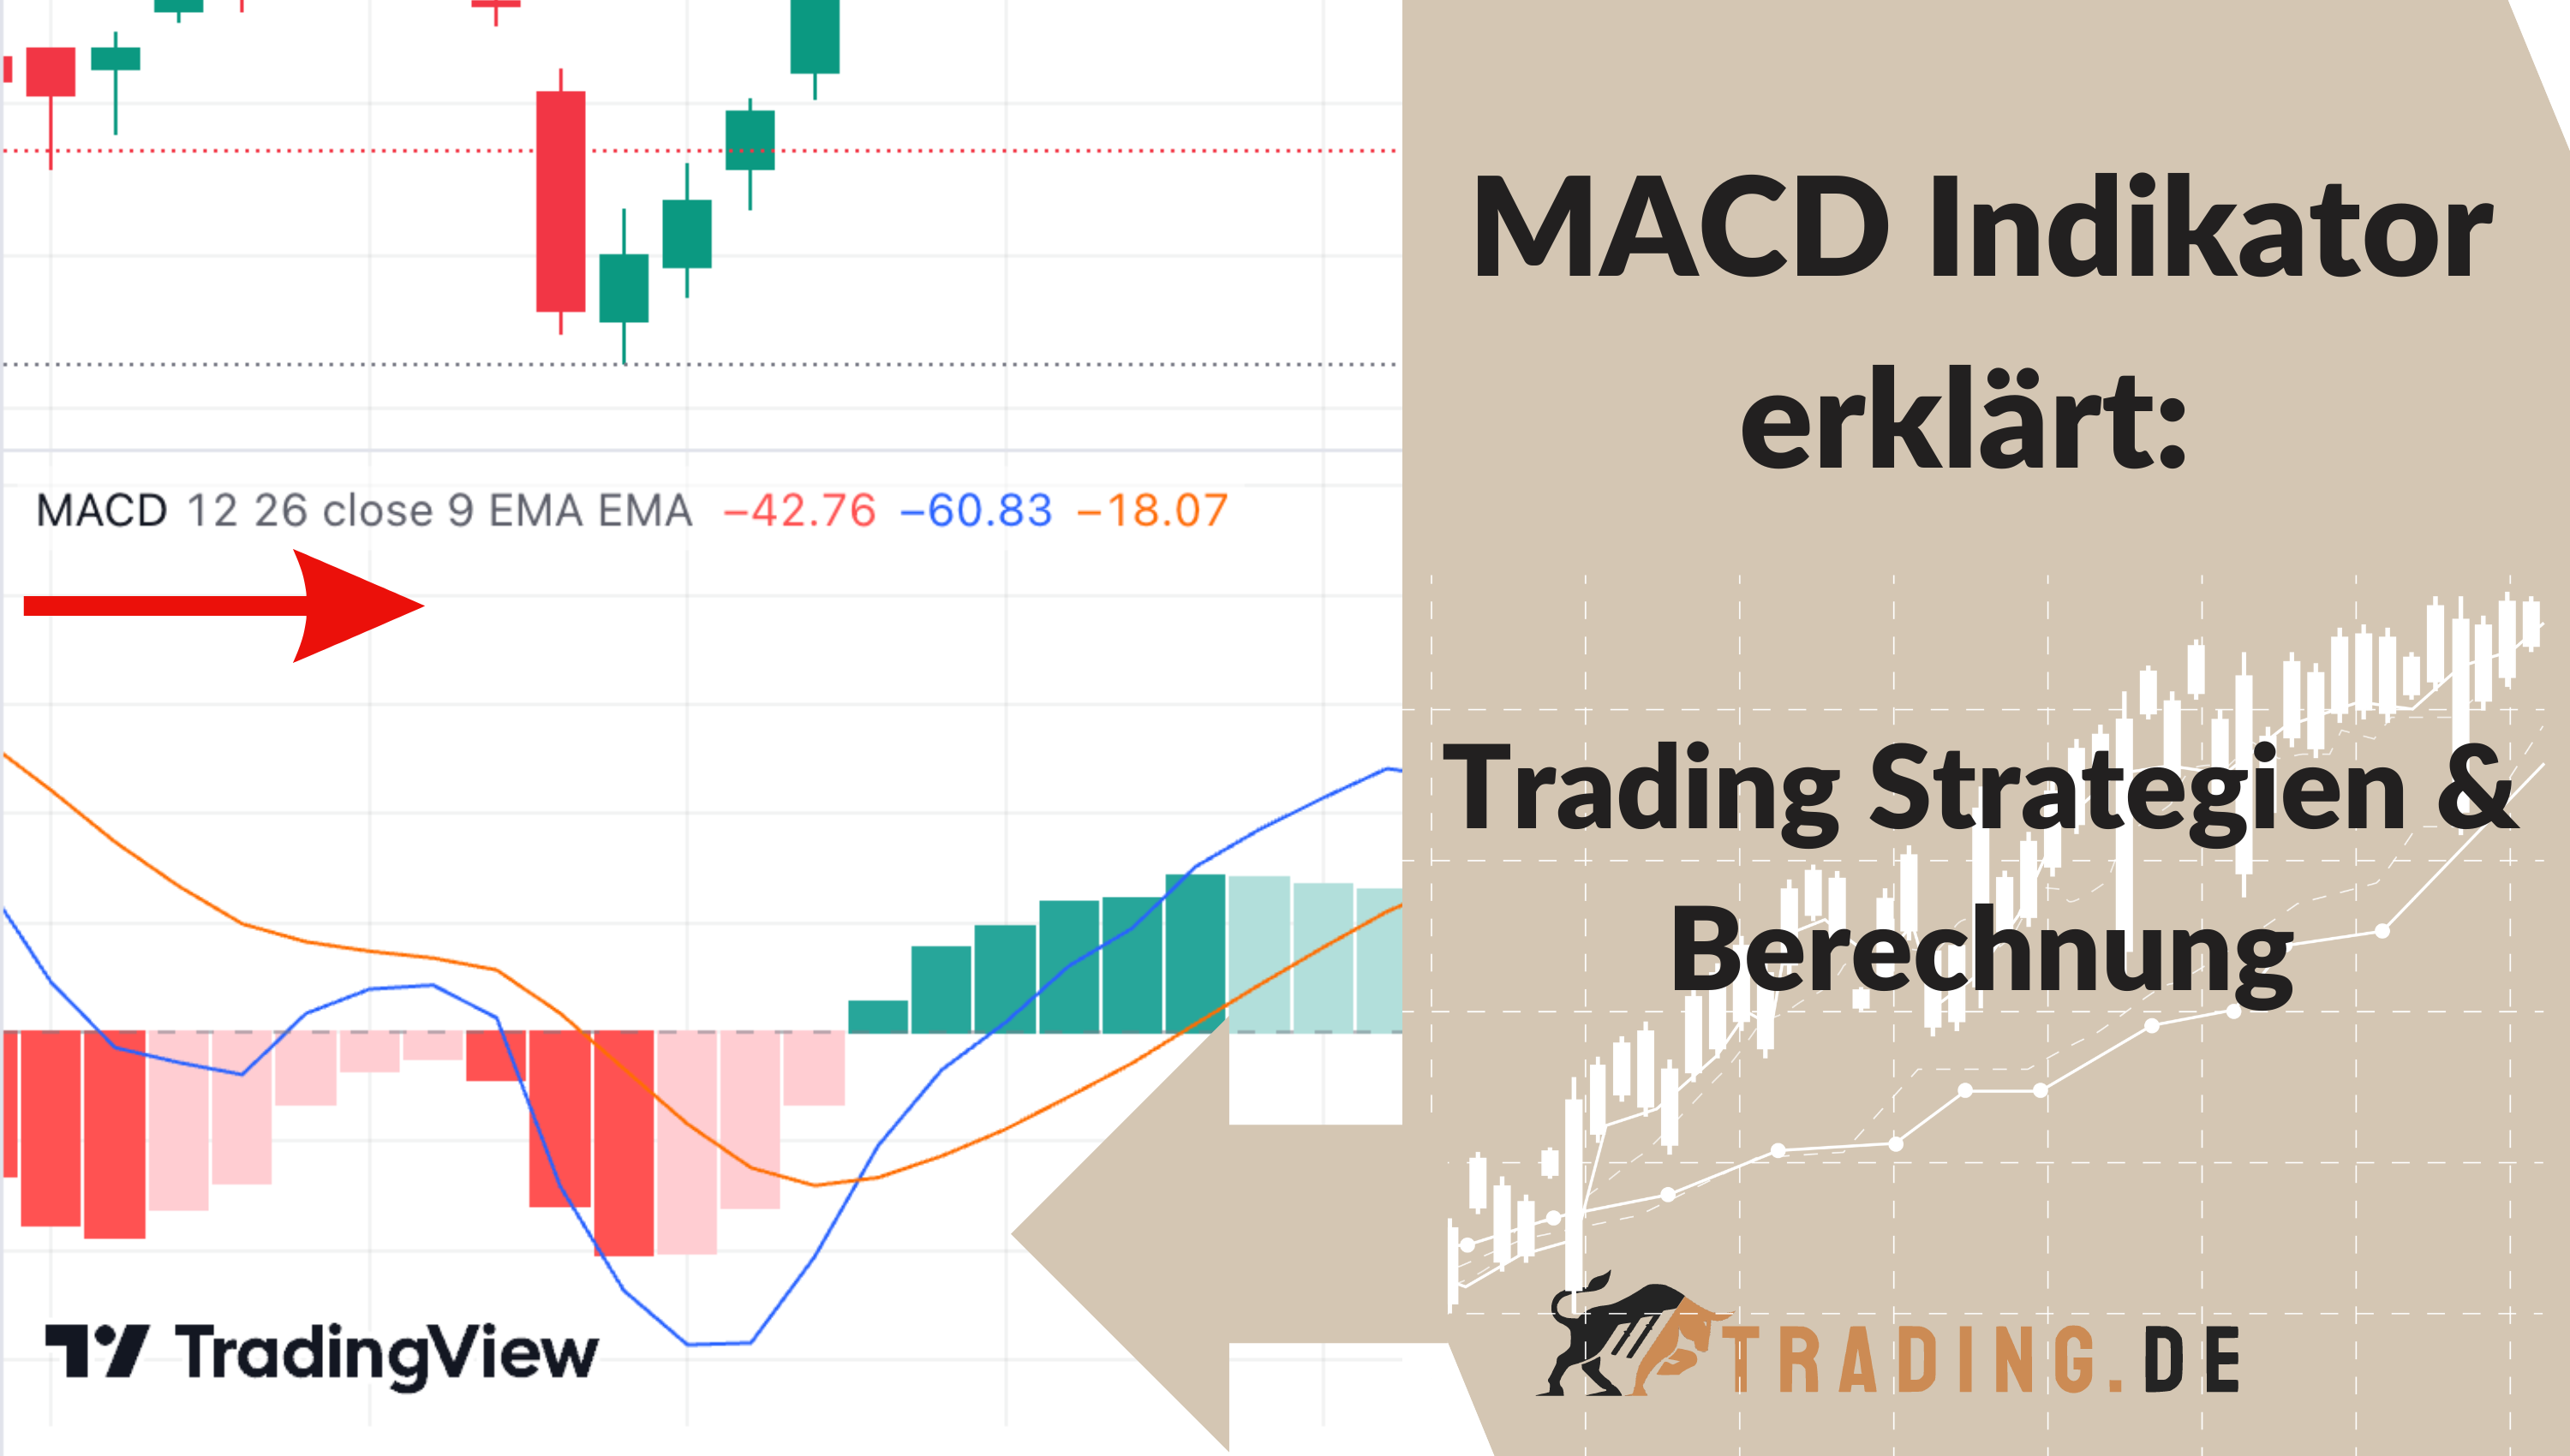 MACD Indikator erklärt Trading Strategien & Berechnung